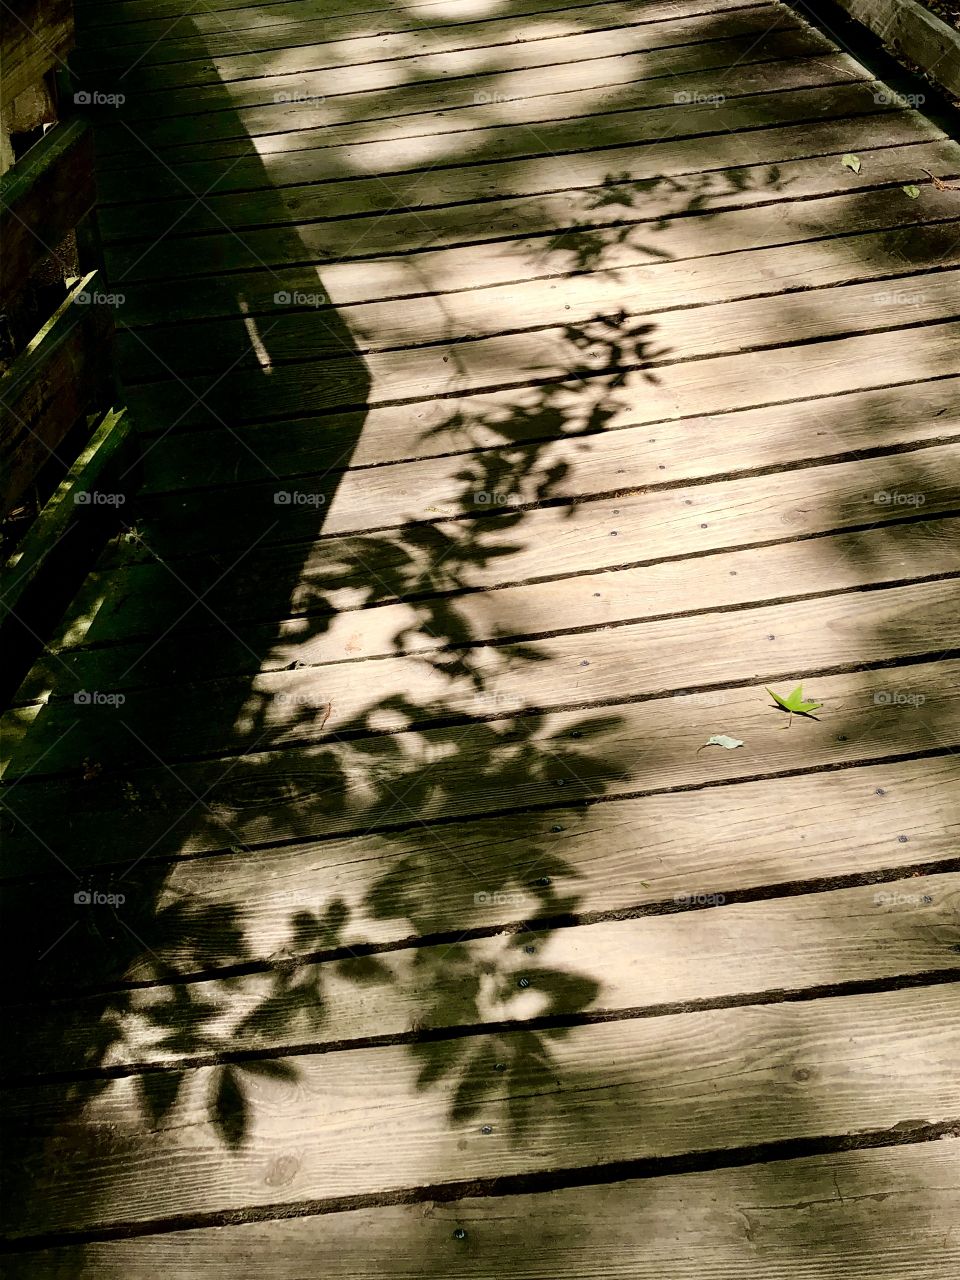 Shadows on the wood walk